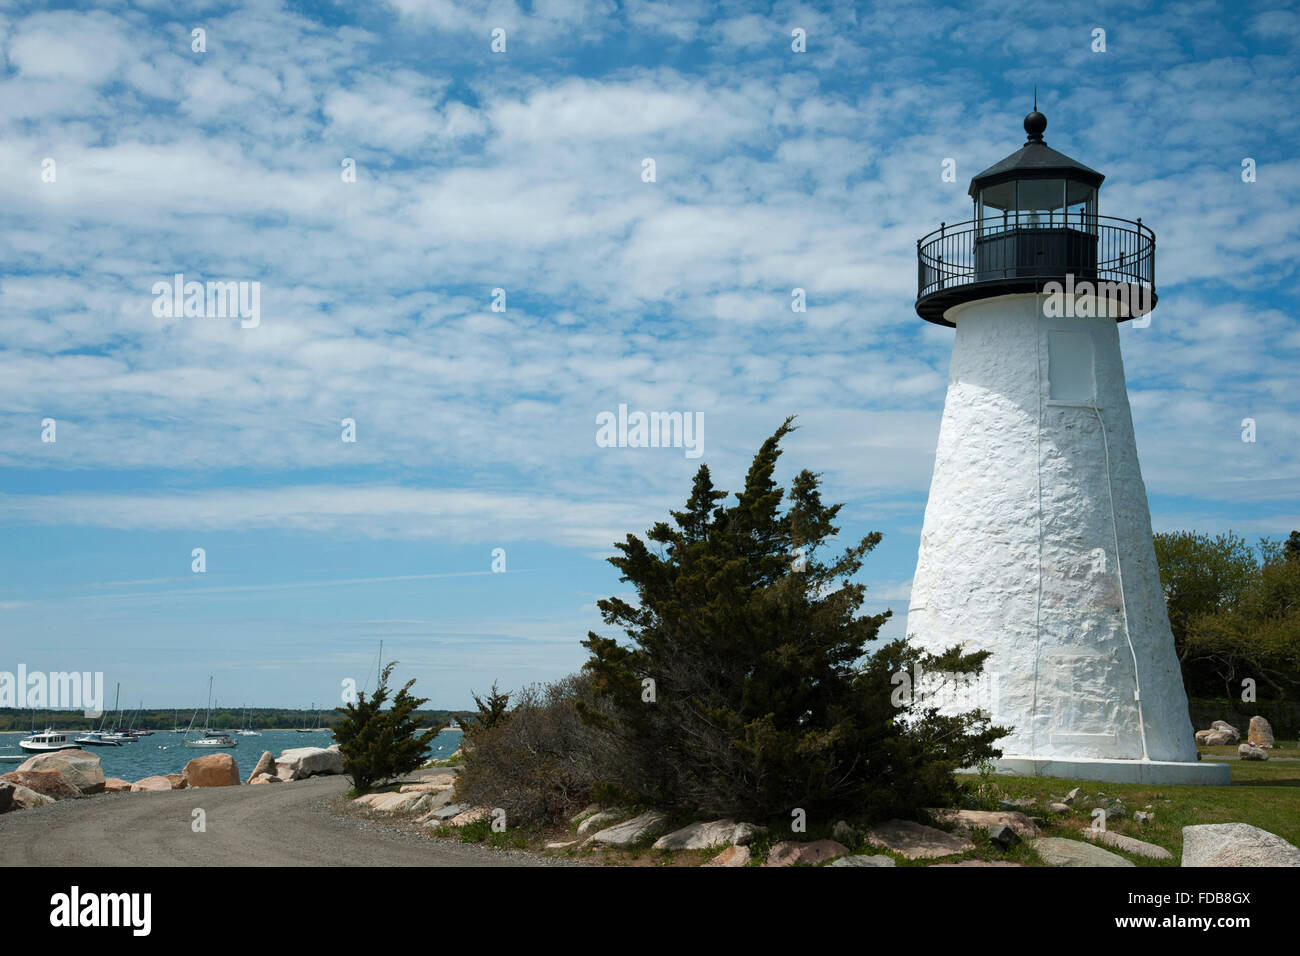 Ned’s Point lighthouse overlooks Mattapoisett Harbor in Massachusetts, on a warm springtime day. It is situated inside Veterans Memorial Park. Stock Photo